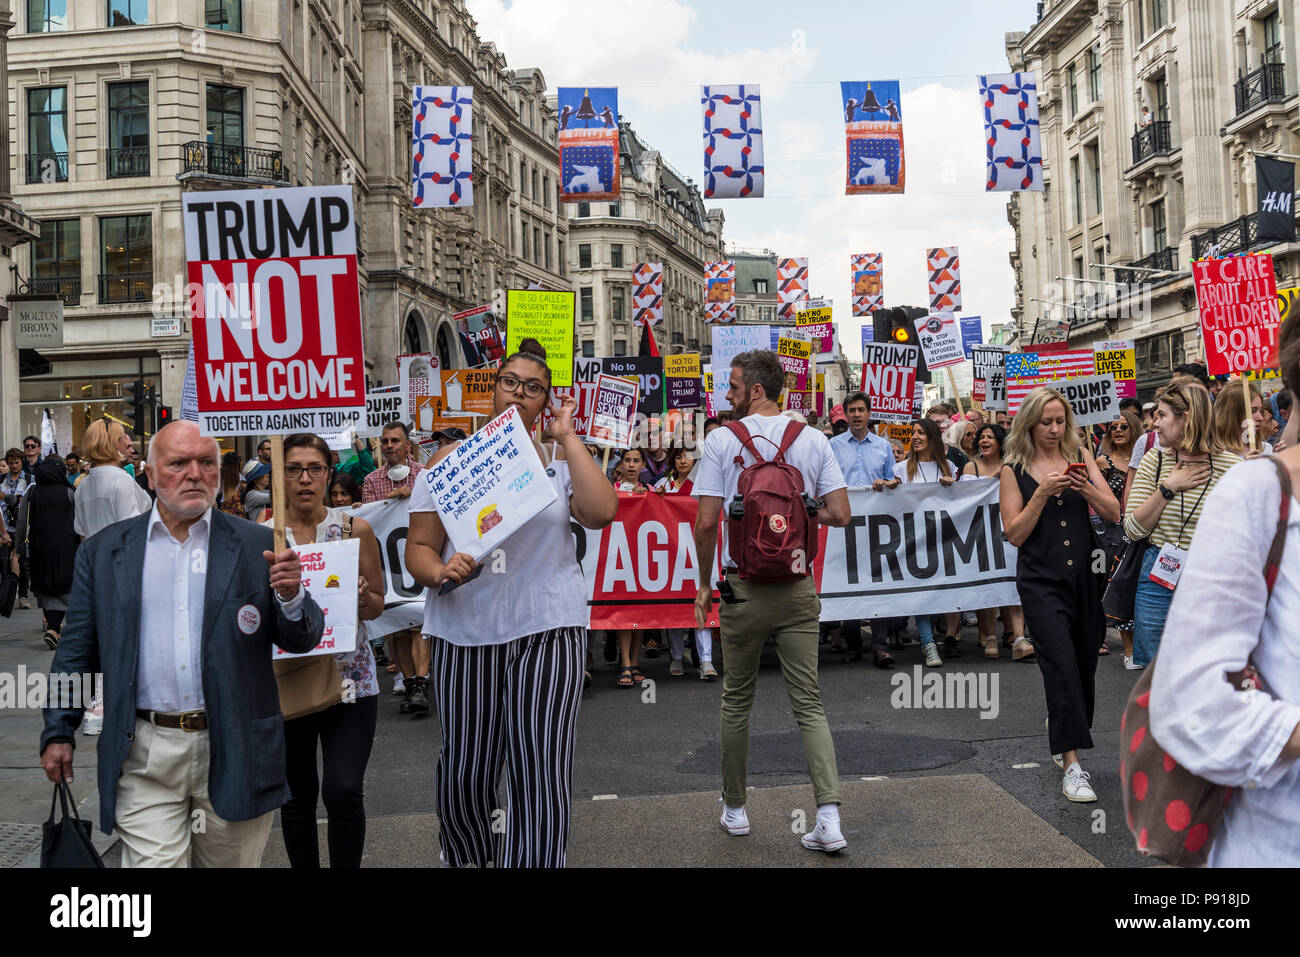 London, UK, 13 July 2018. Anti-Trump demonstration, Ed Miliband behind the banner Together against Trump, London, UK 13.07.2018 Credit: Bjanka Kadic/Alamy Live News Stock Photo